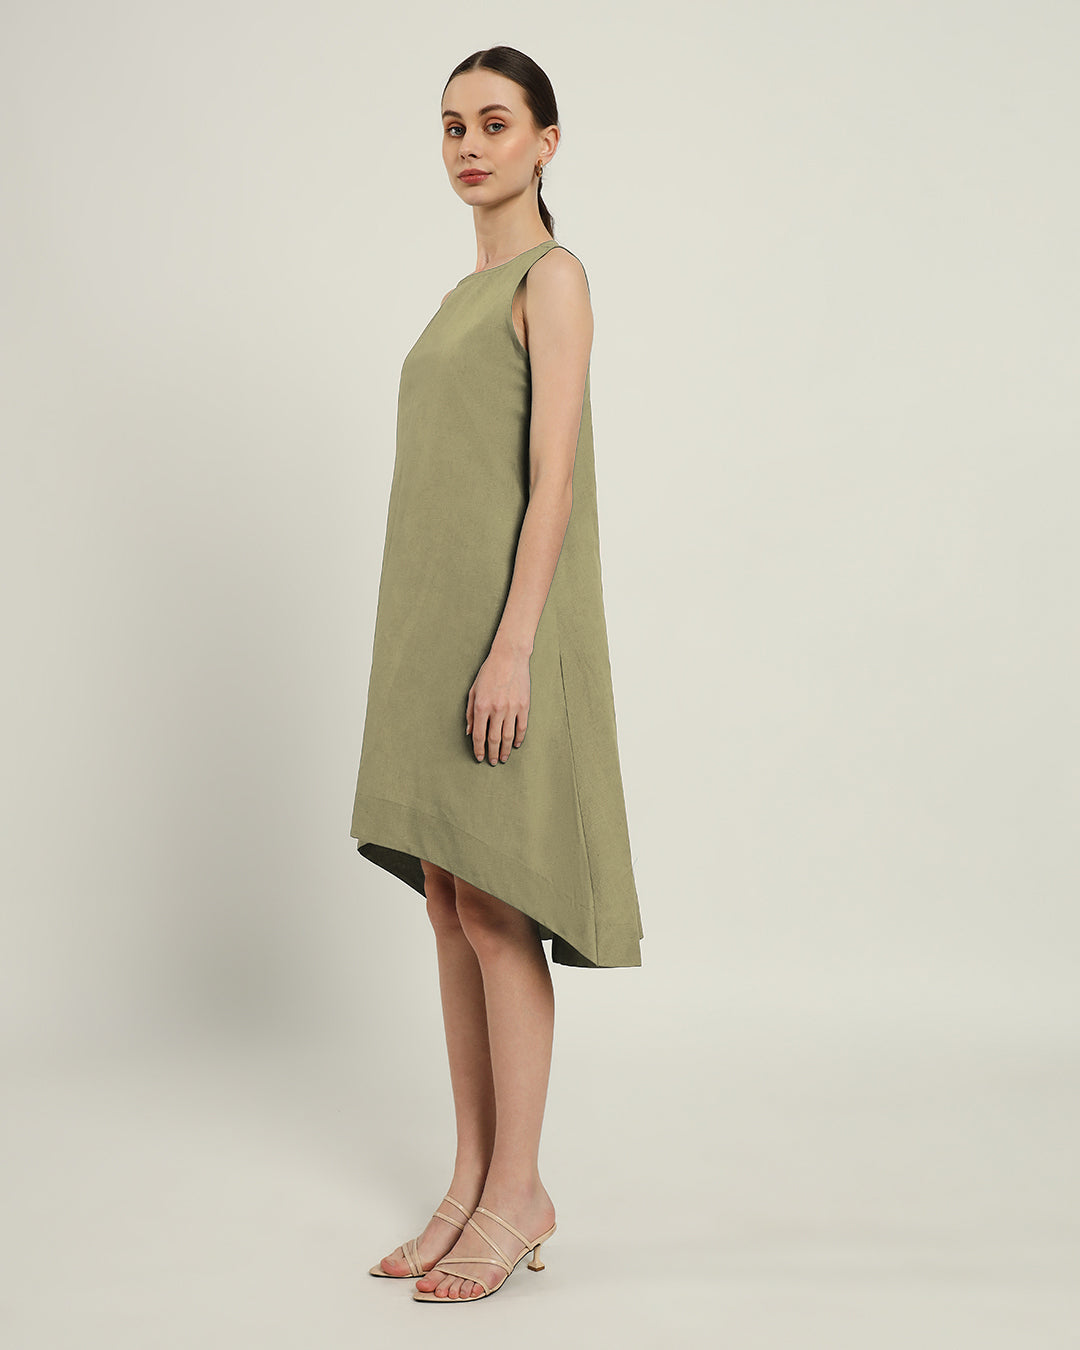 The Odesa Daisy Olive Linen Dress